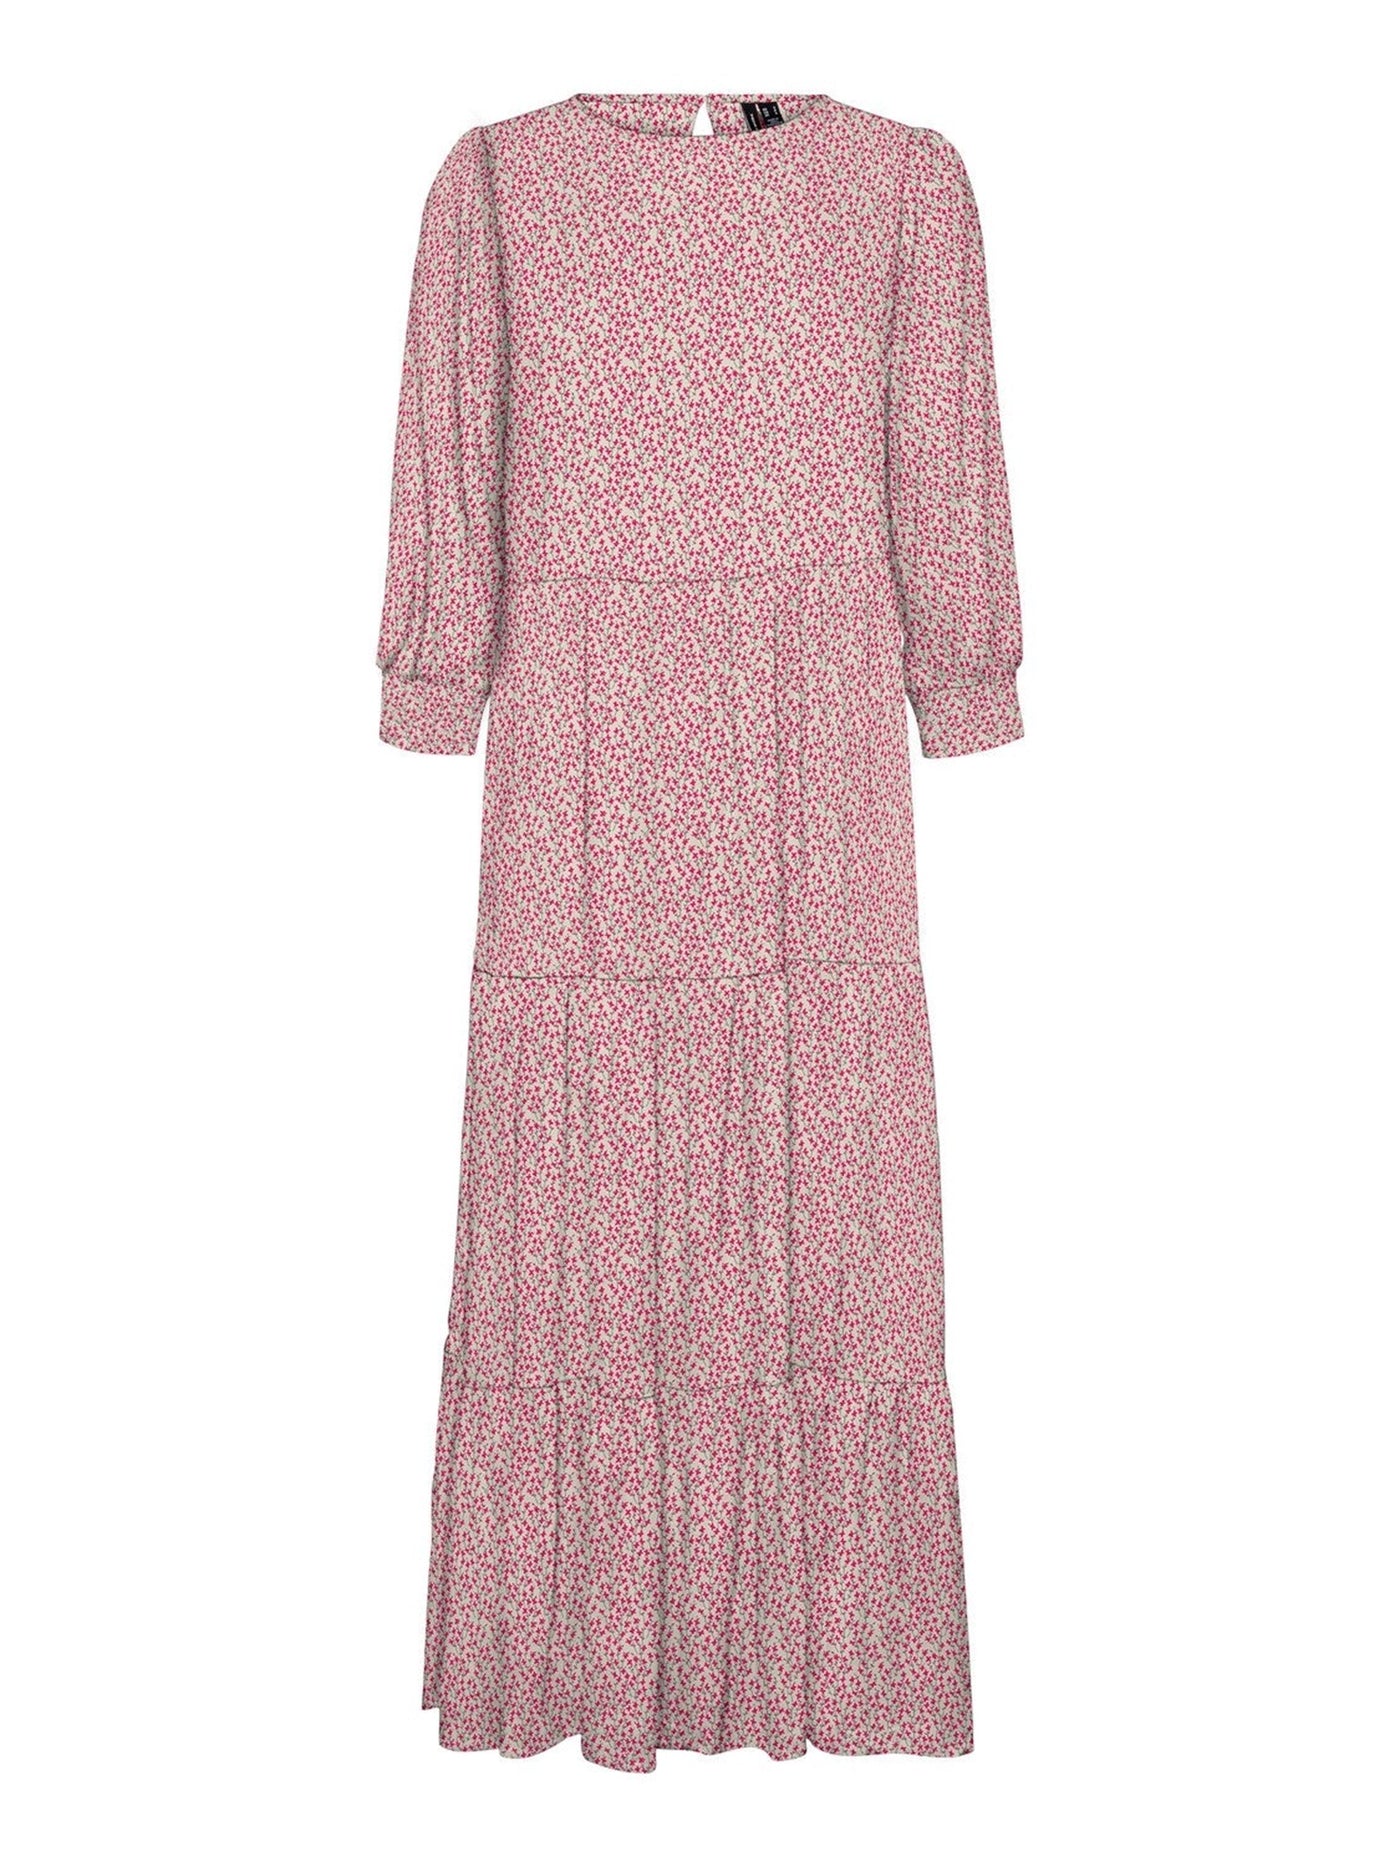 Nethe Dress - Birch FUCHSIA - Vero Moda - Pink 2